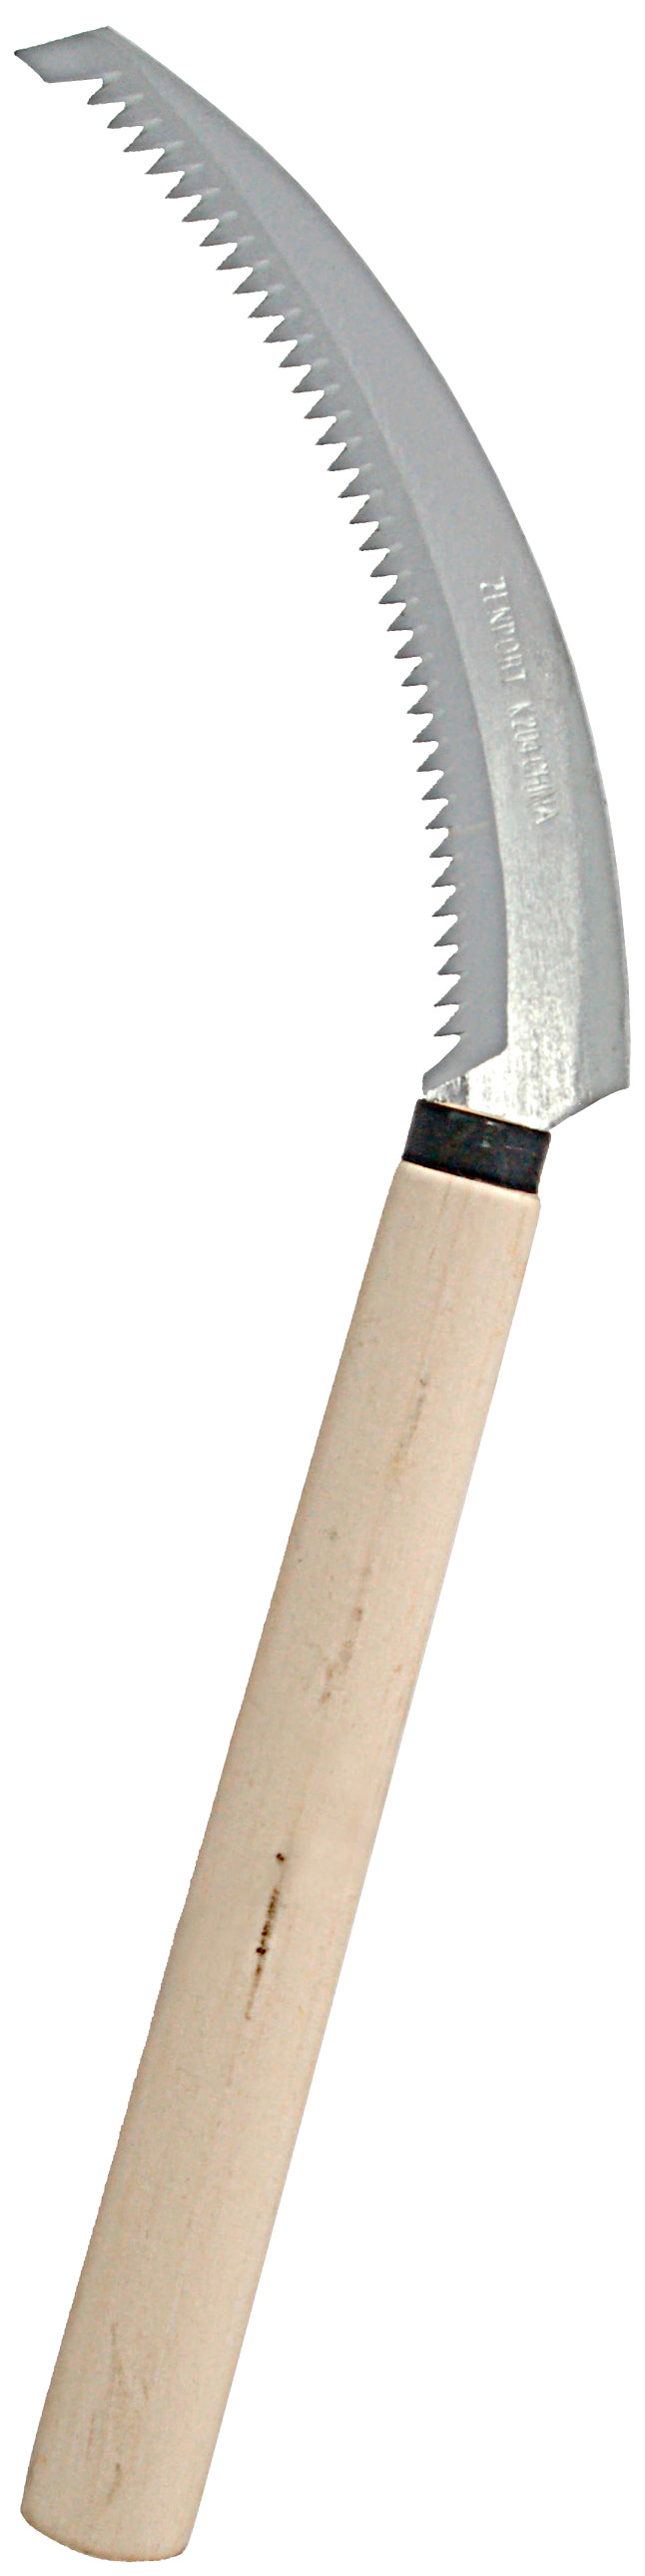 Zenport Sickle K204 Cuchillo de cosecha/hoz de deshierbe, mango de madera, dentado, japonés, grado A+, acero inoxidable, hoja de